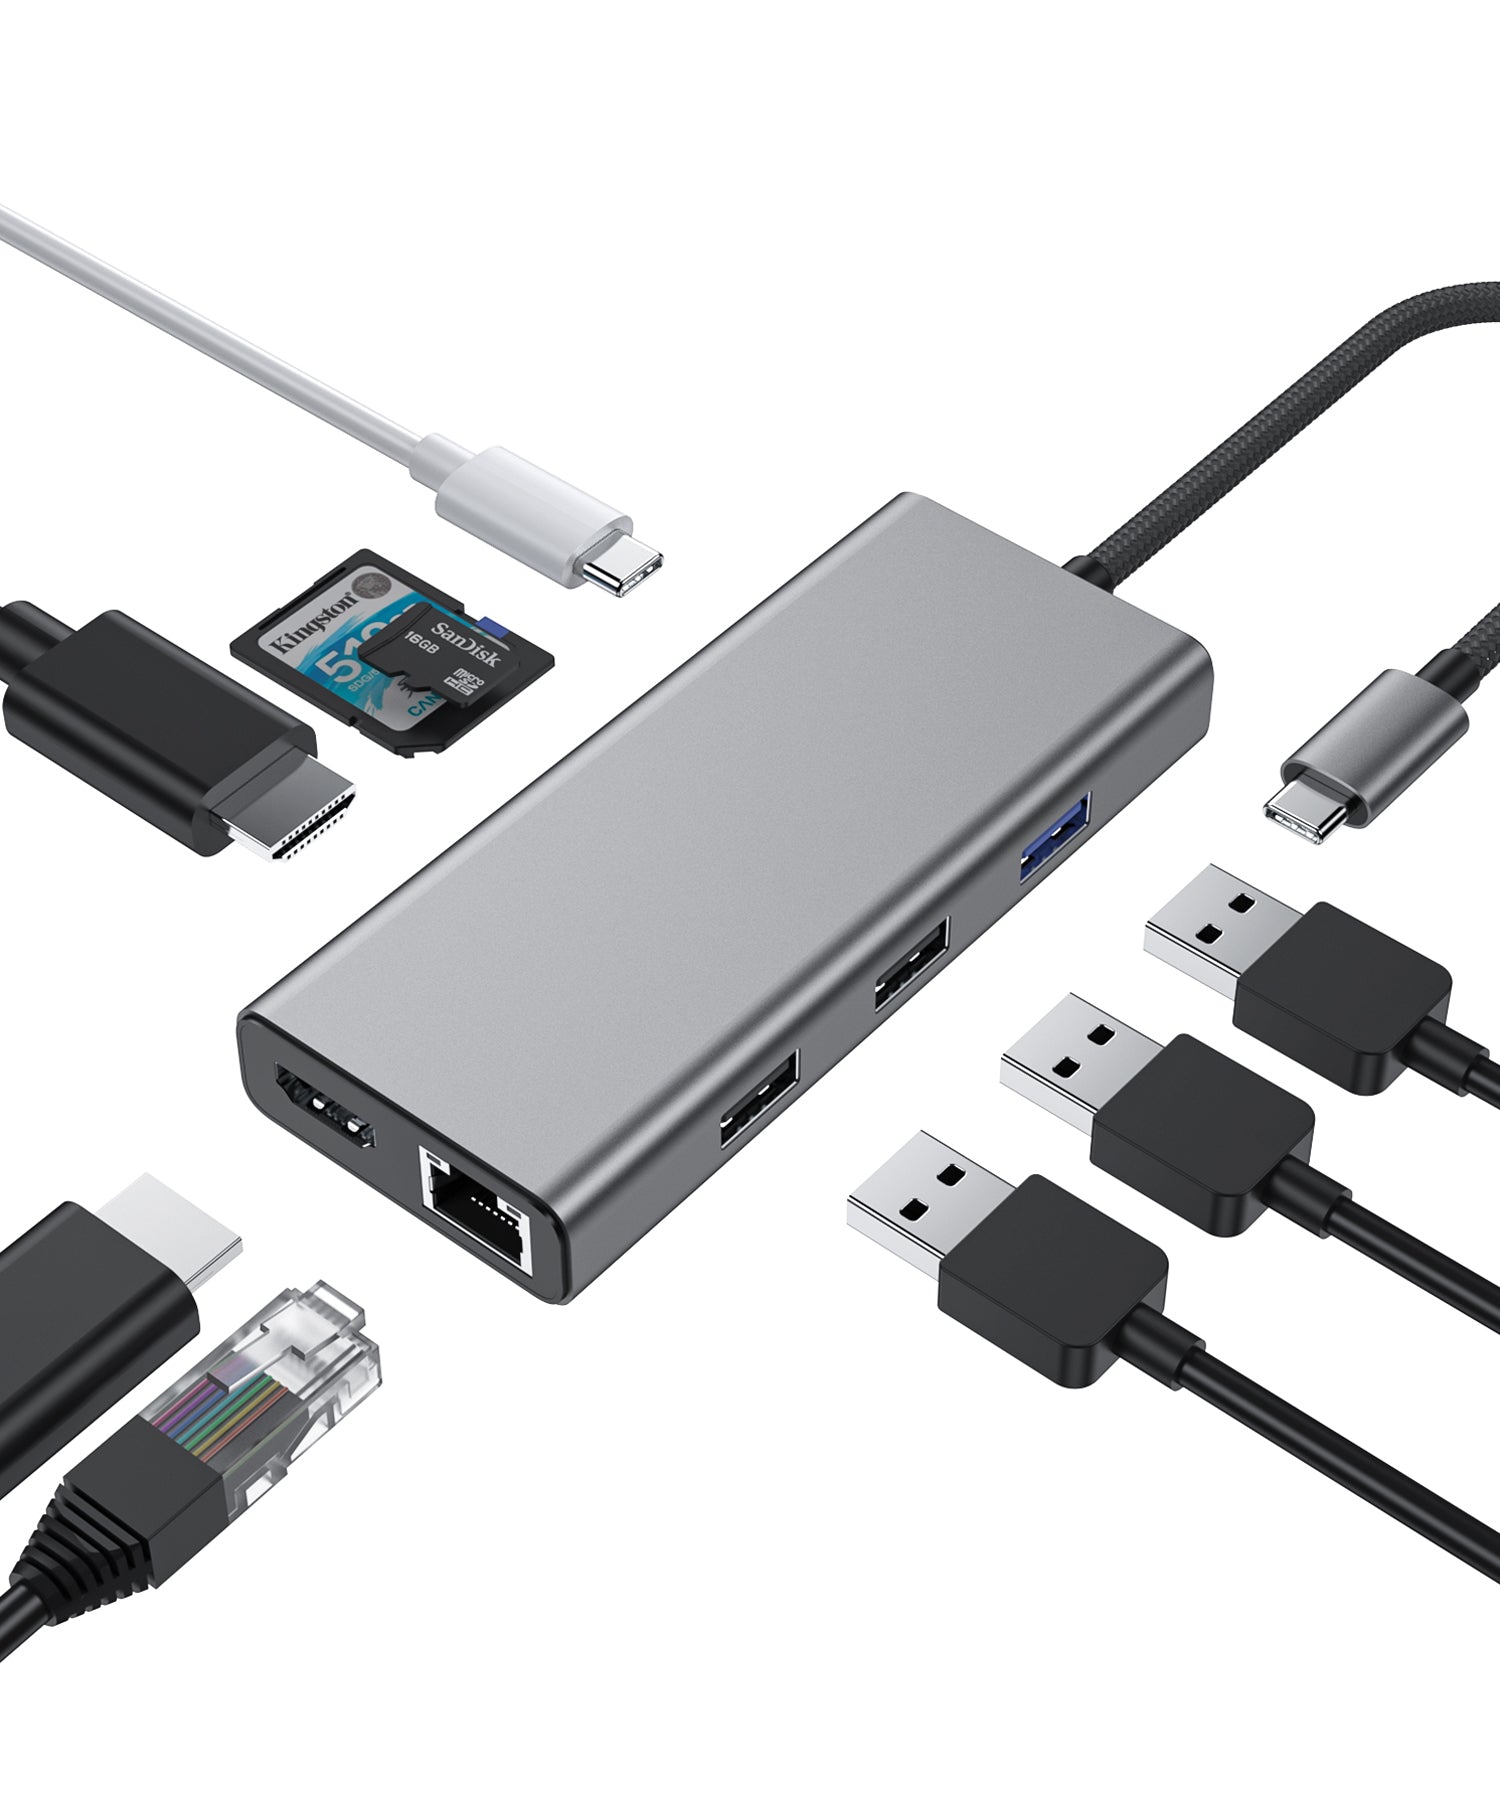 PULWTOP 9-in-1 USB C Hub Dual HDMI Monitor USB C Adapter with Dual HDMI, 3x USB 3.0, Ethernet, PD